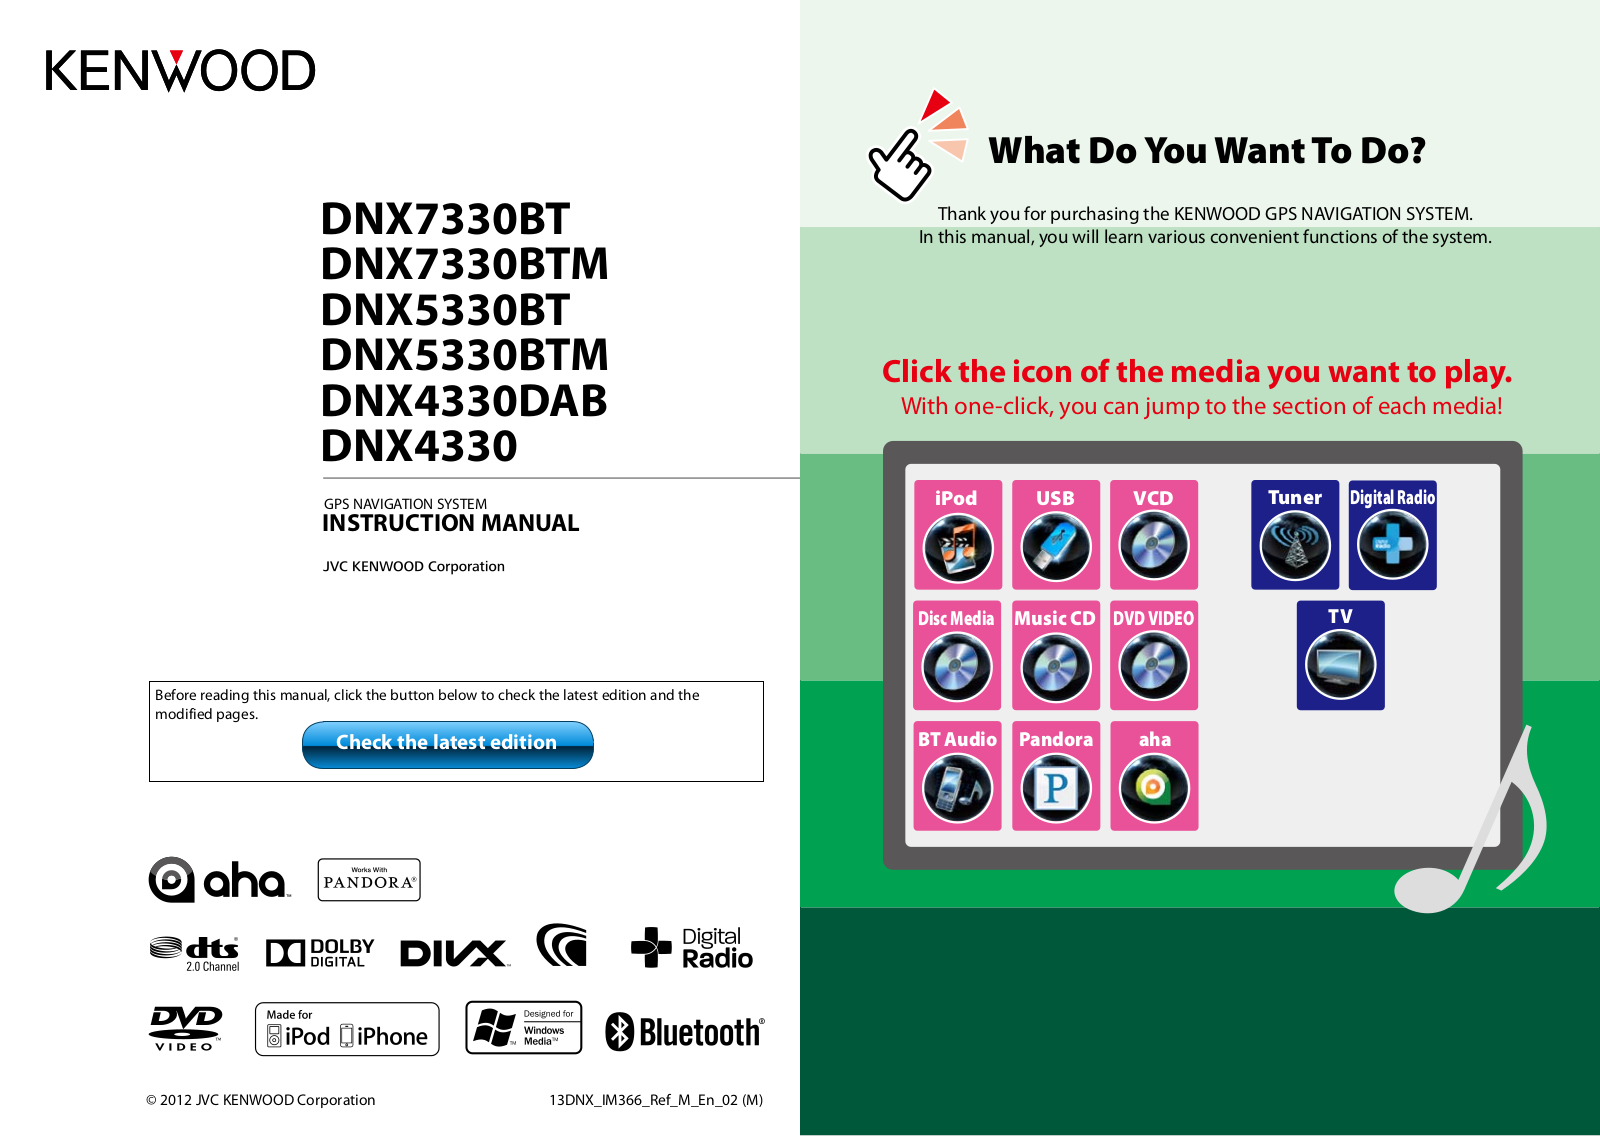 Kenwood DNX4330, DNX4330DAB, DNX5330BT, DNX5330BTM, DNX7330BTM Instruction Manual